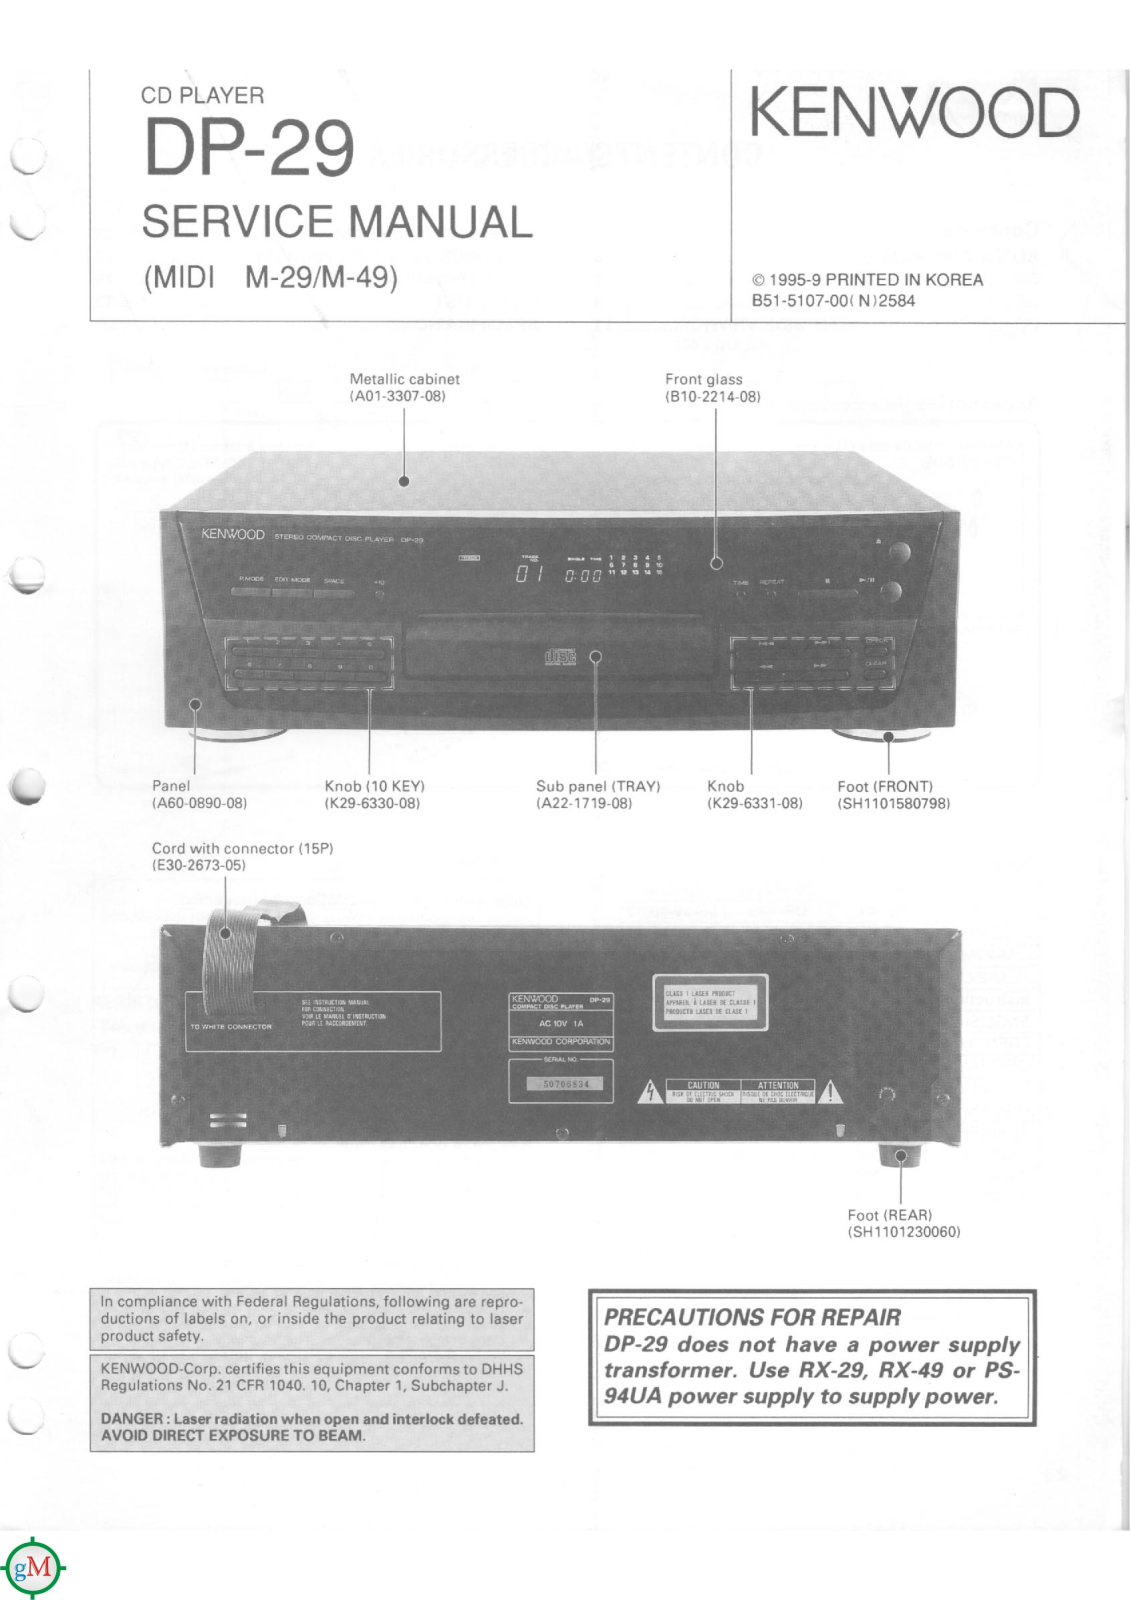 Kenwood DP-29 MIDI Service manual